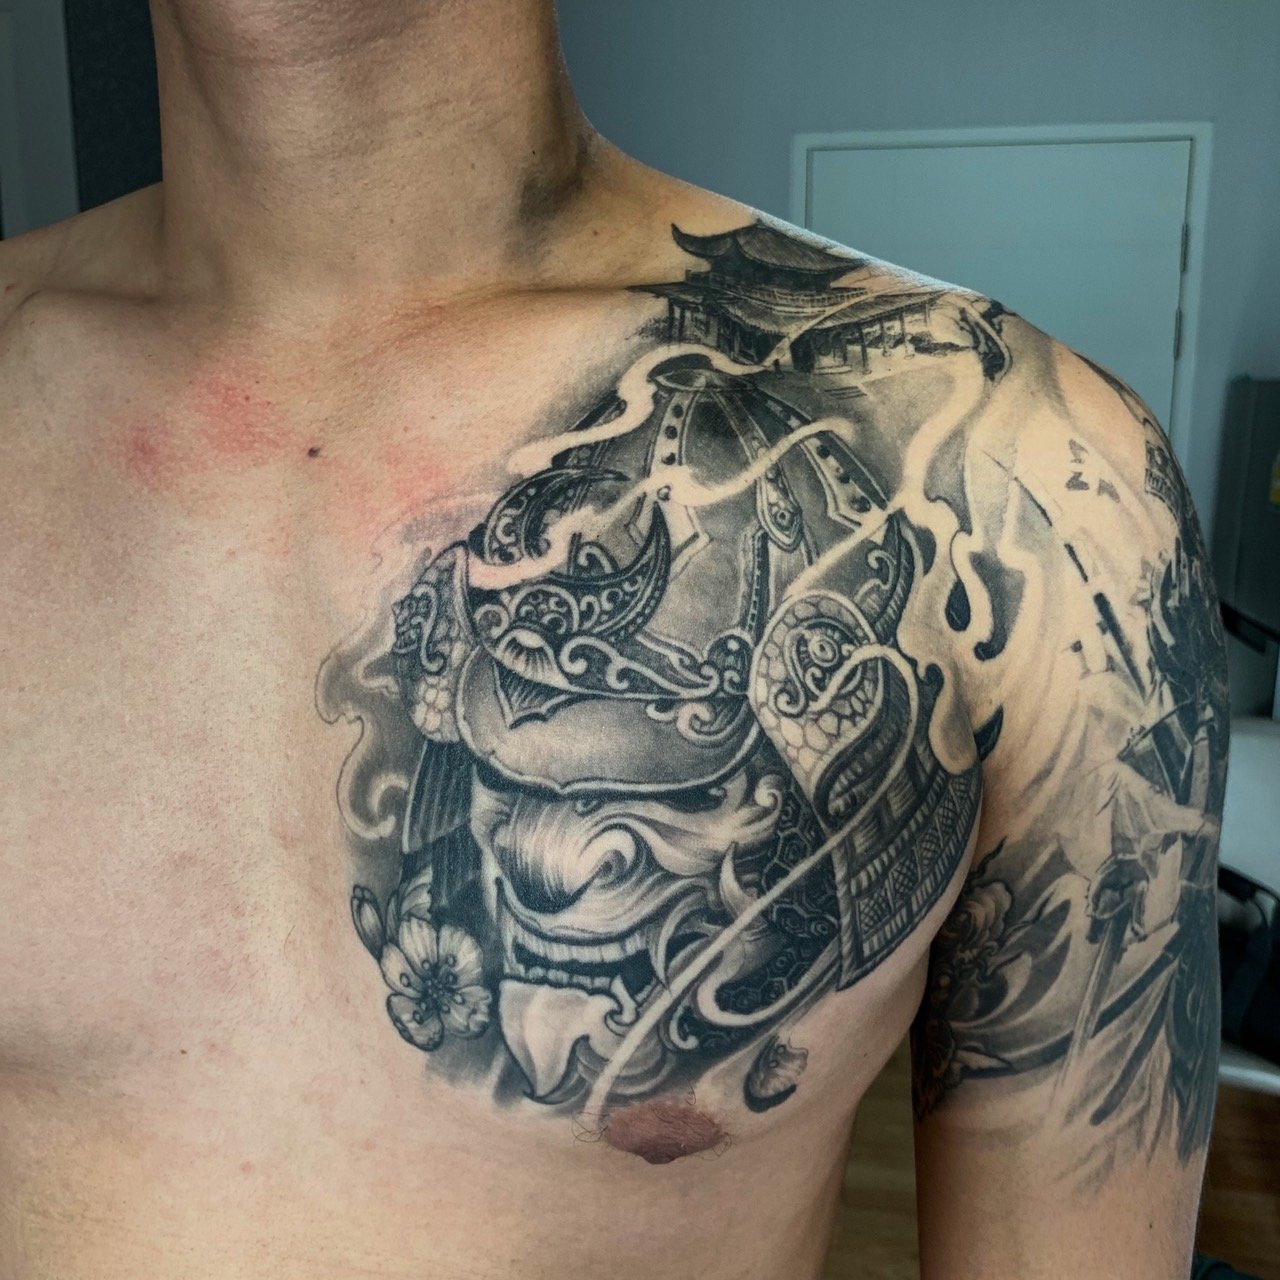 BonBon_Tattoo - Samurai tattoo on the chest and stomach... | Facebook